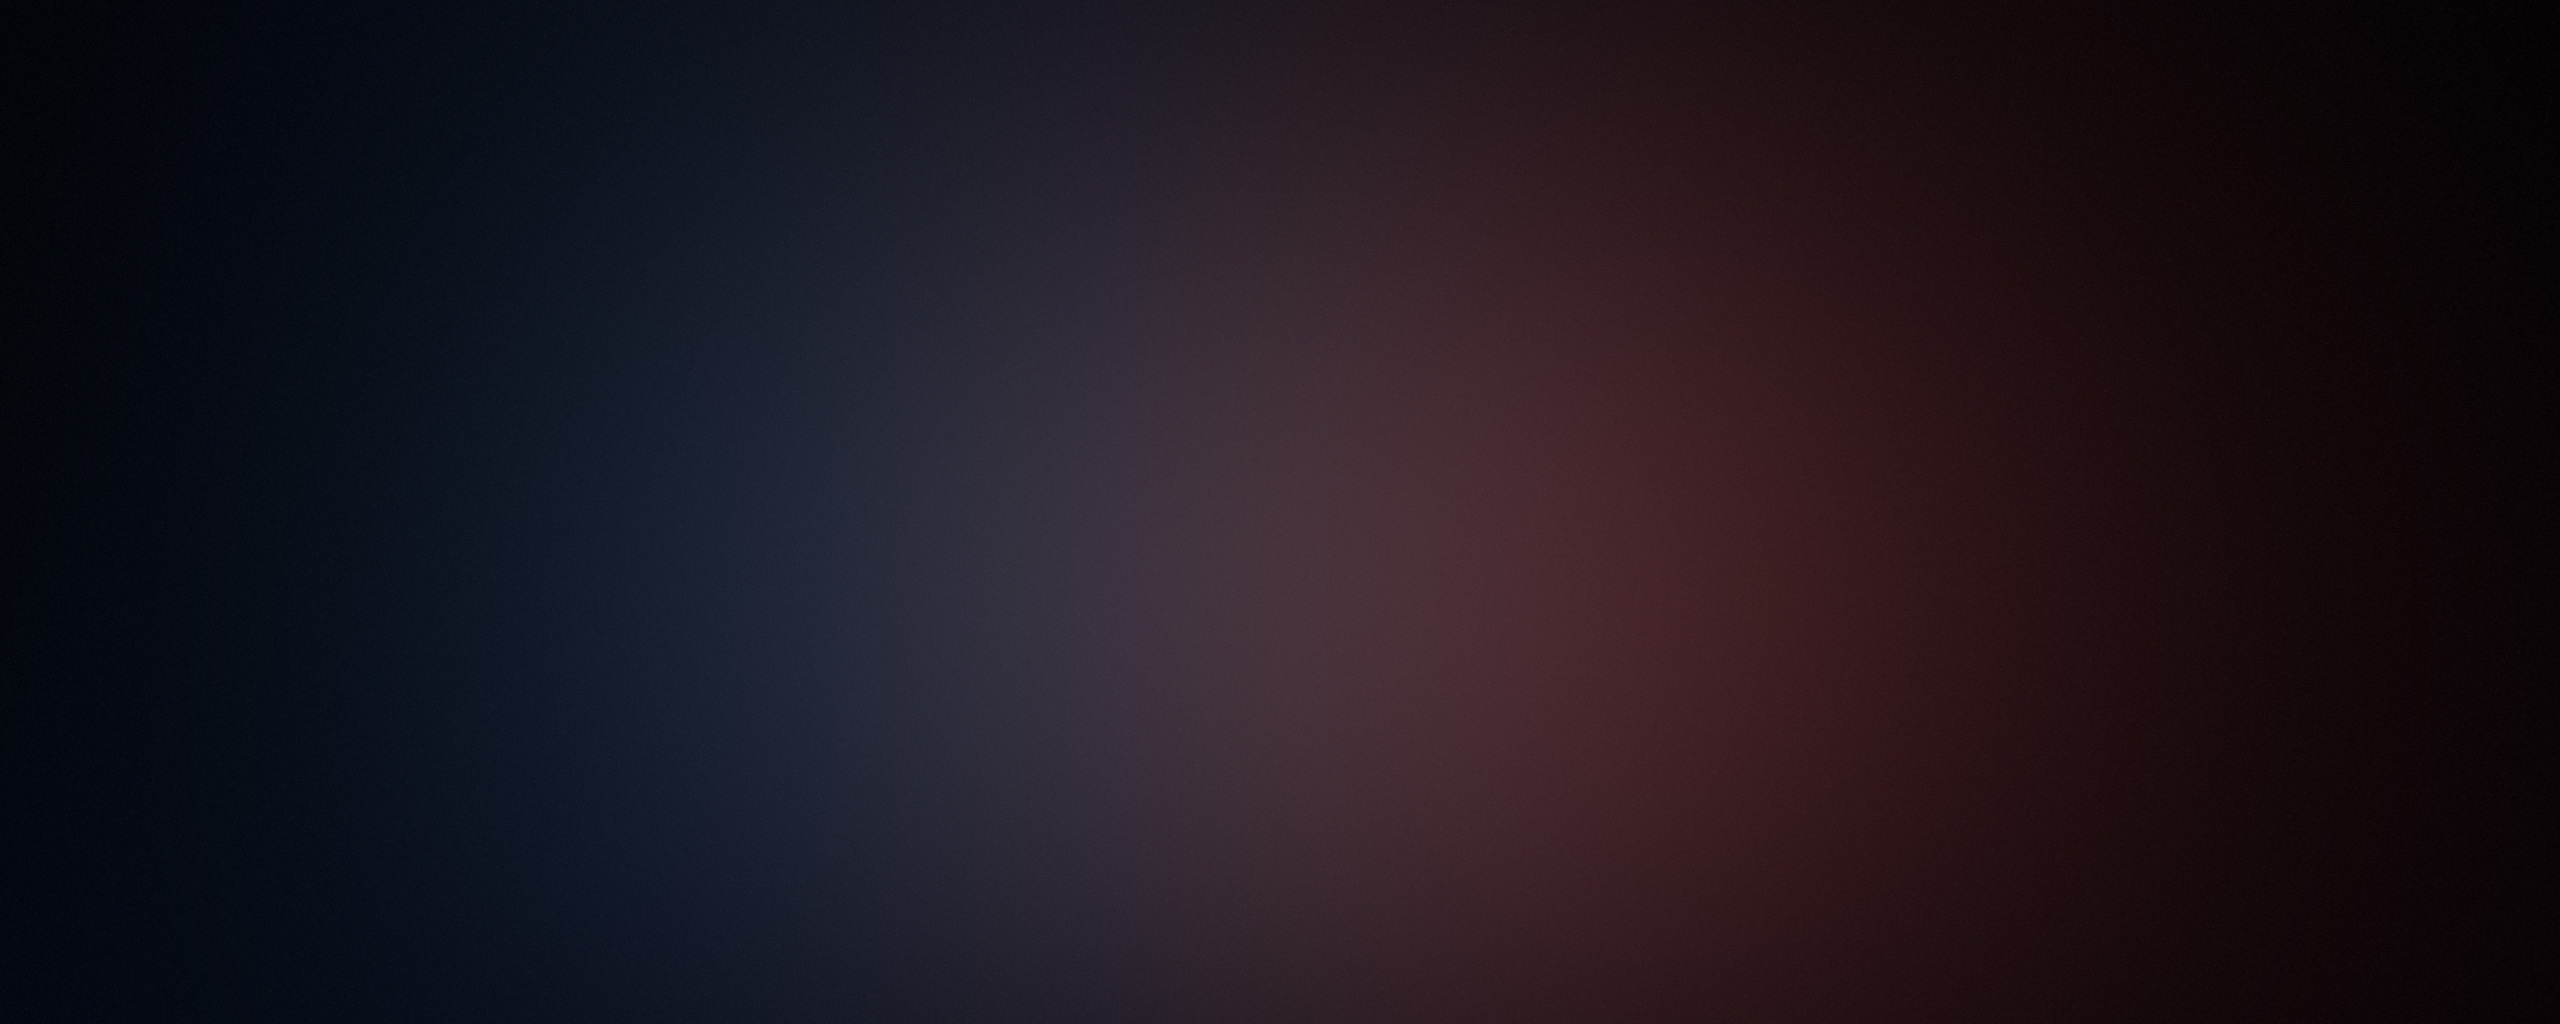 Simple Subtle Abstract Dark Minimalism 4k Wallpaper 4K